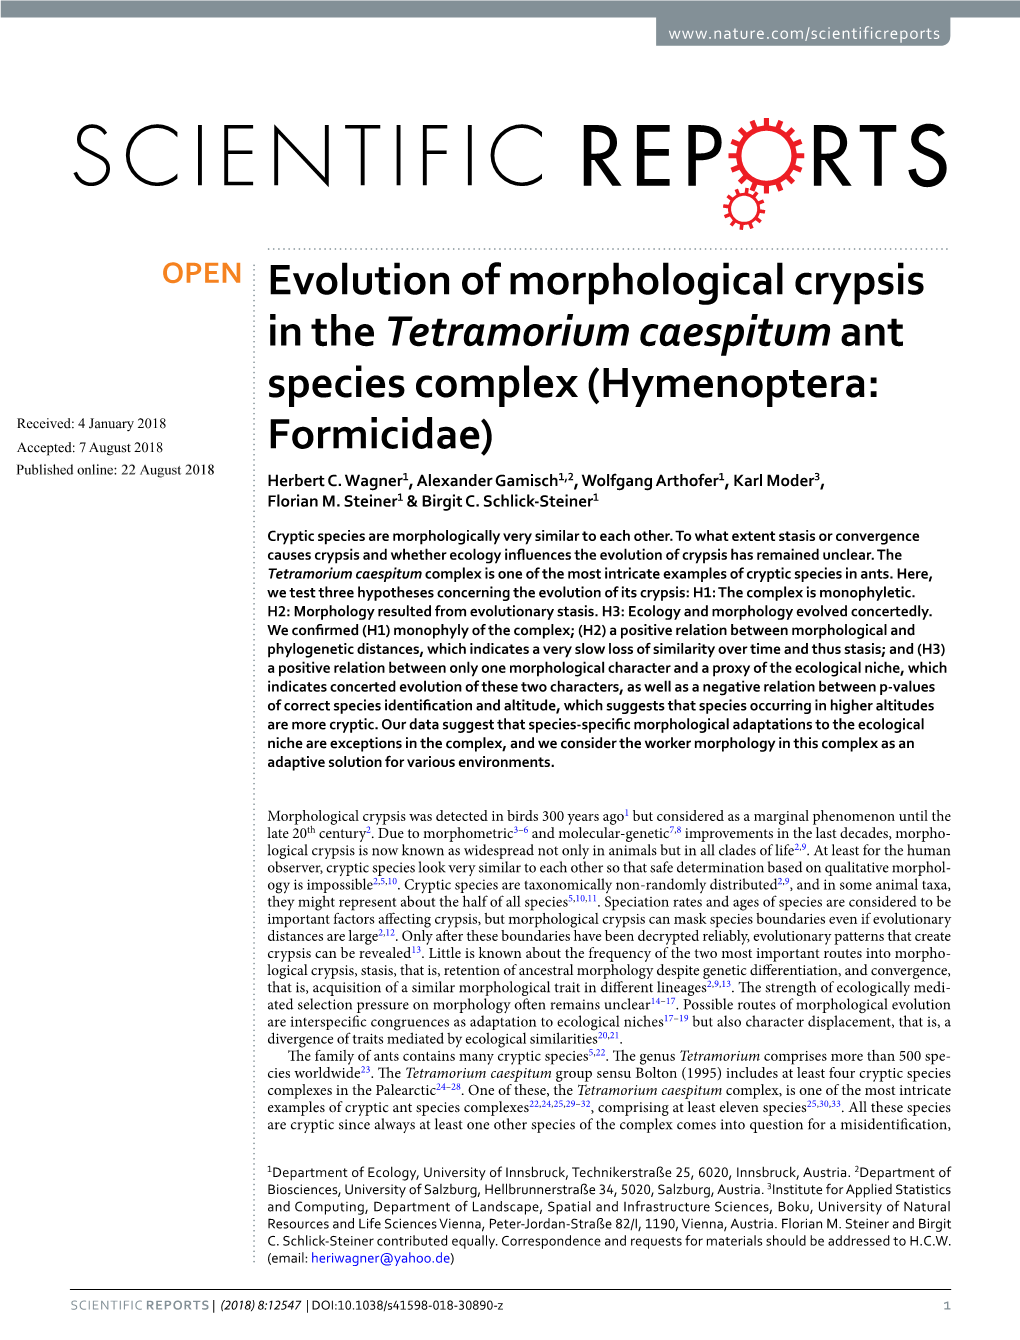 Evolution of Morphological Crypsis in the Tetramorium Caespitum Ant